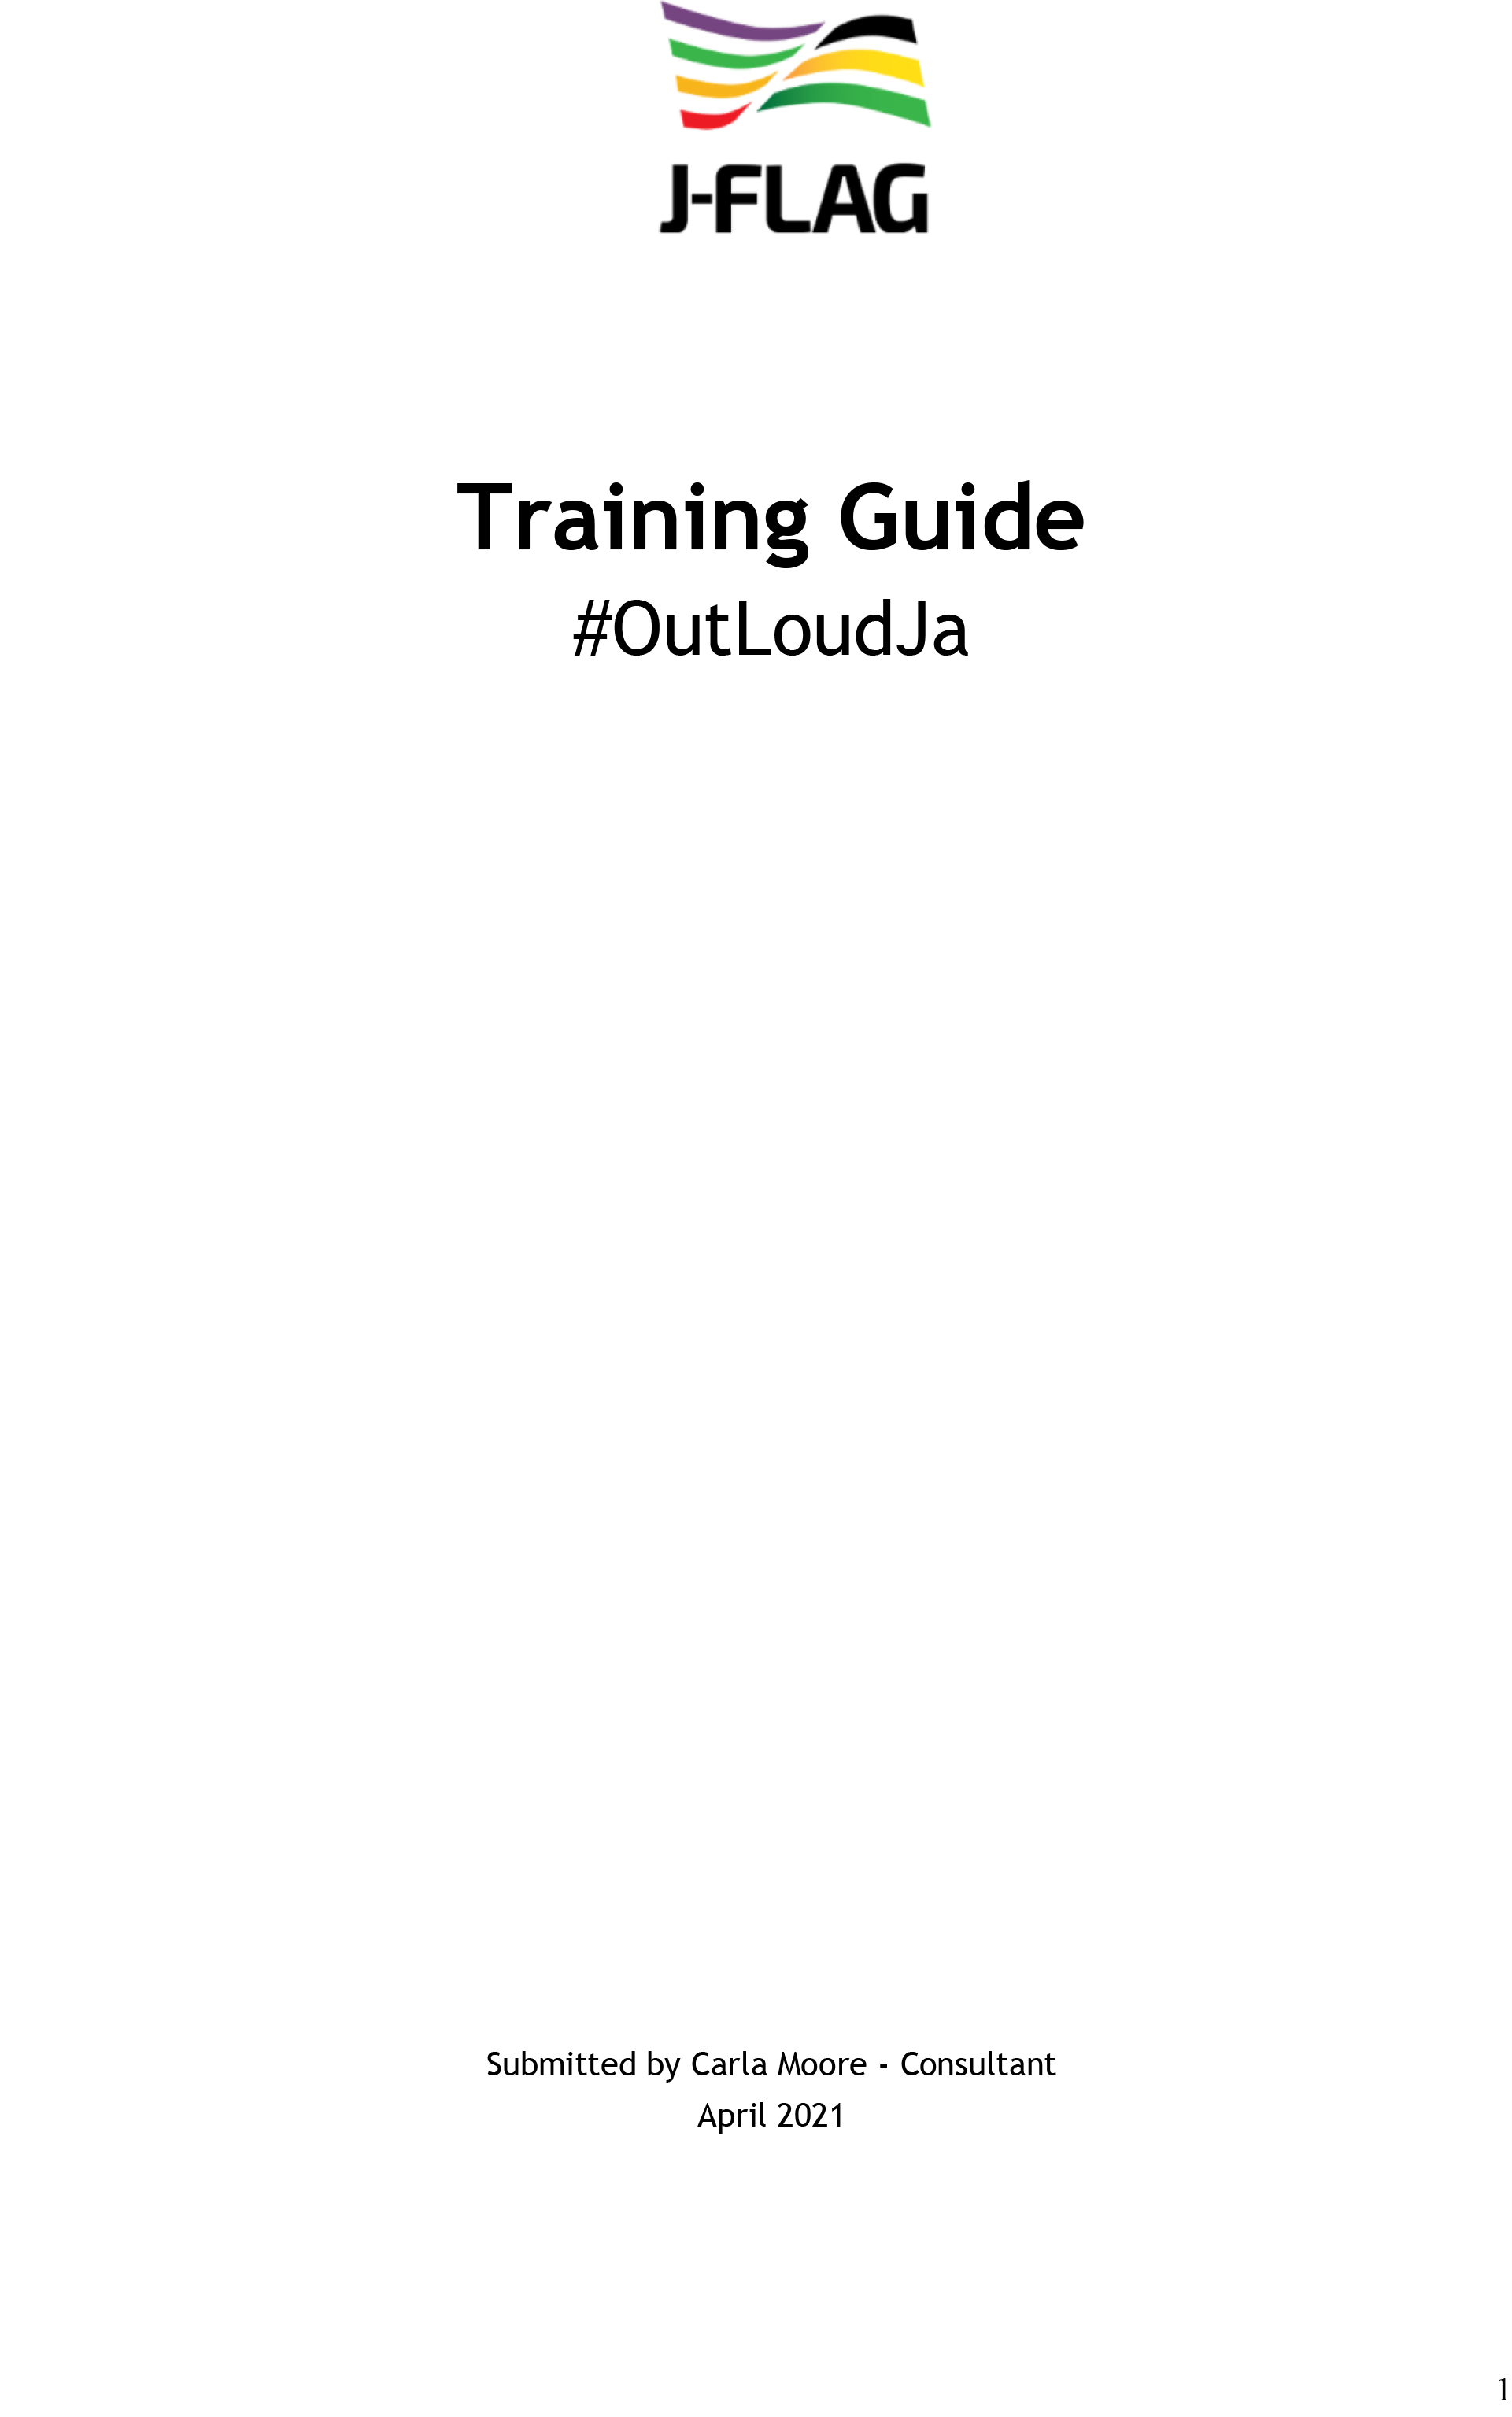 OutLoudJA Training Curriculum